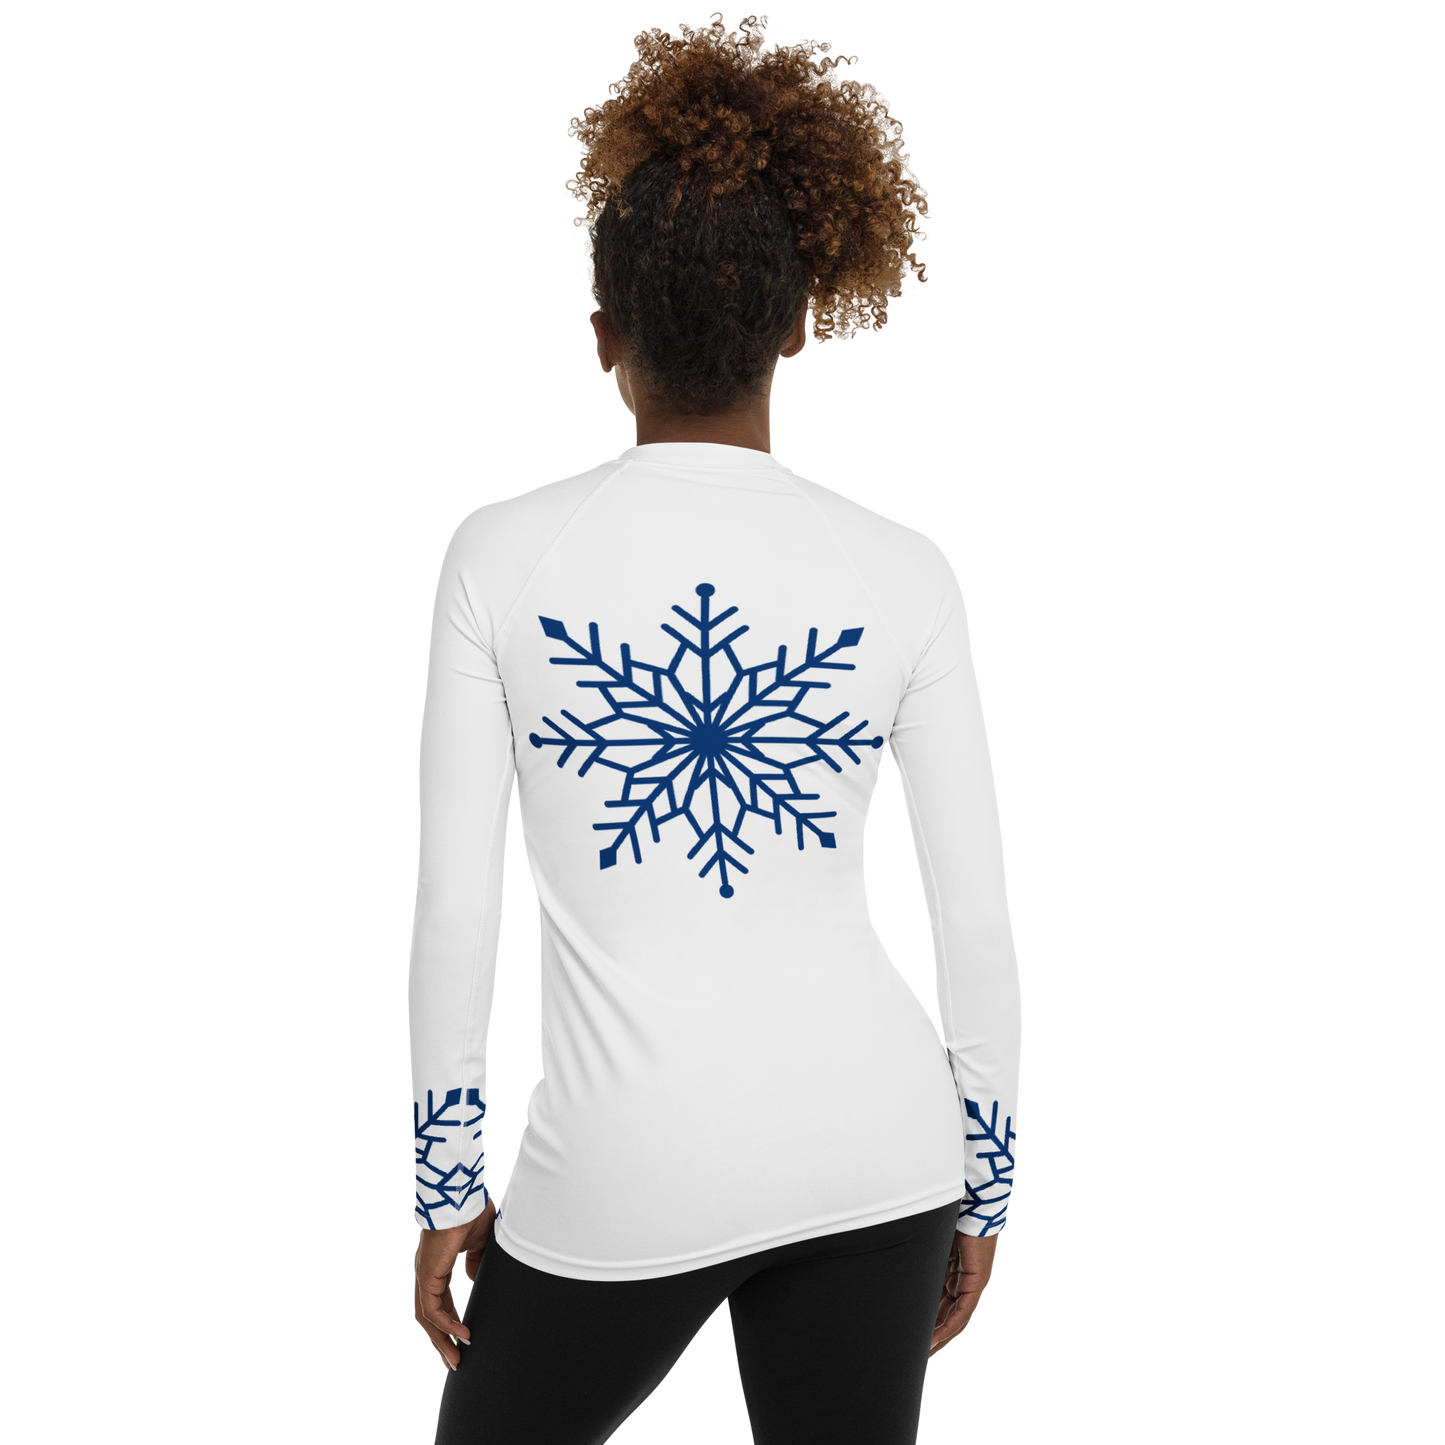 Winter Snowflake Top, Royal Blue Snowflake on White Women's Rash Guard, Holiday Top